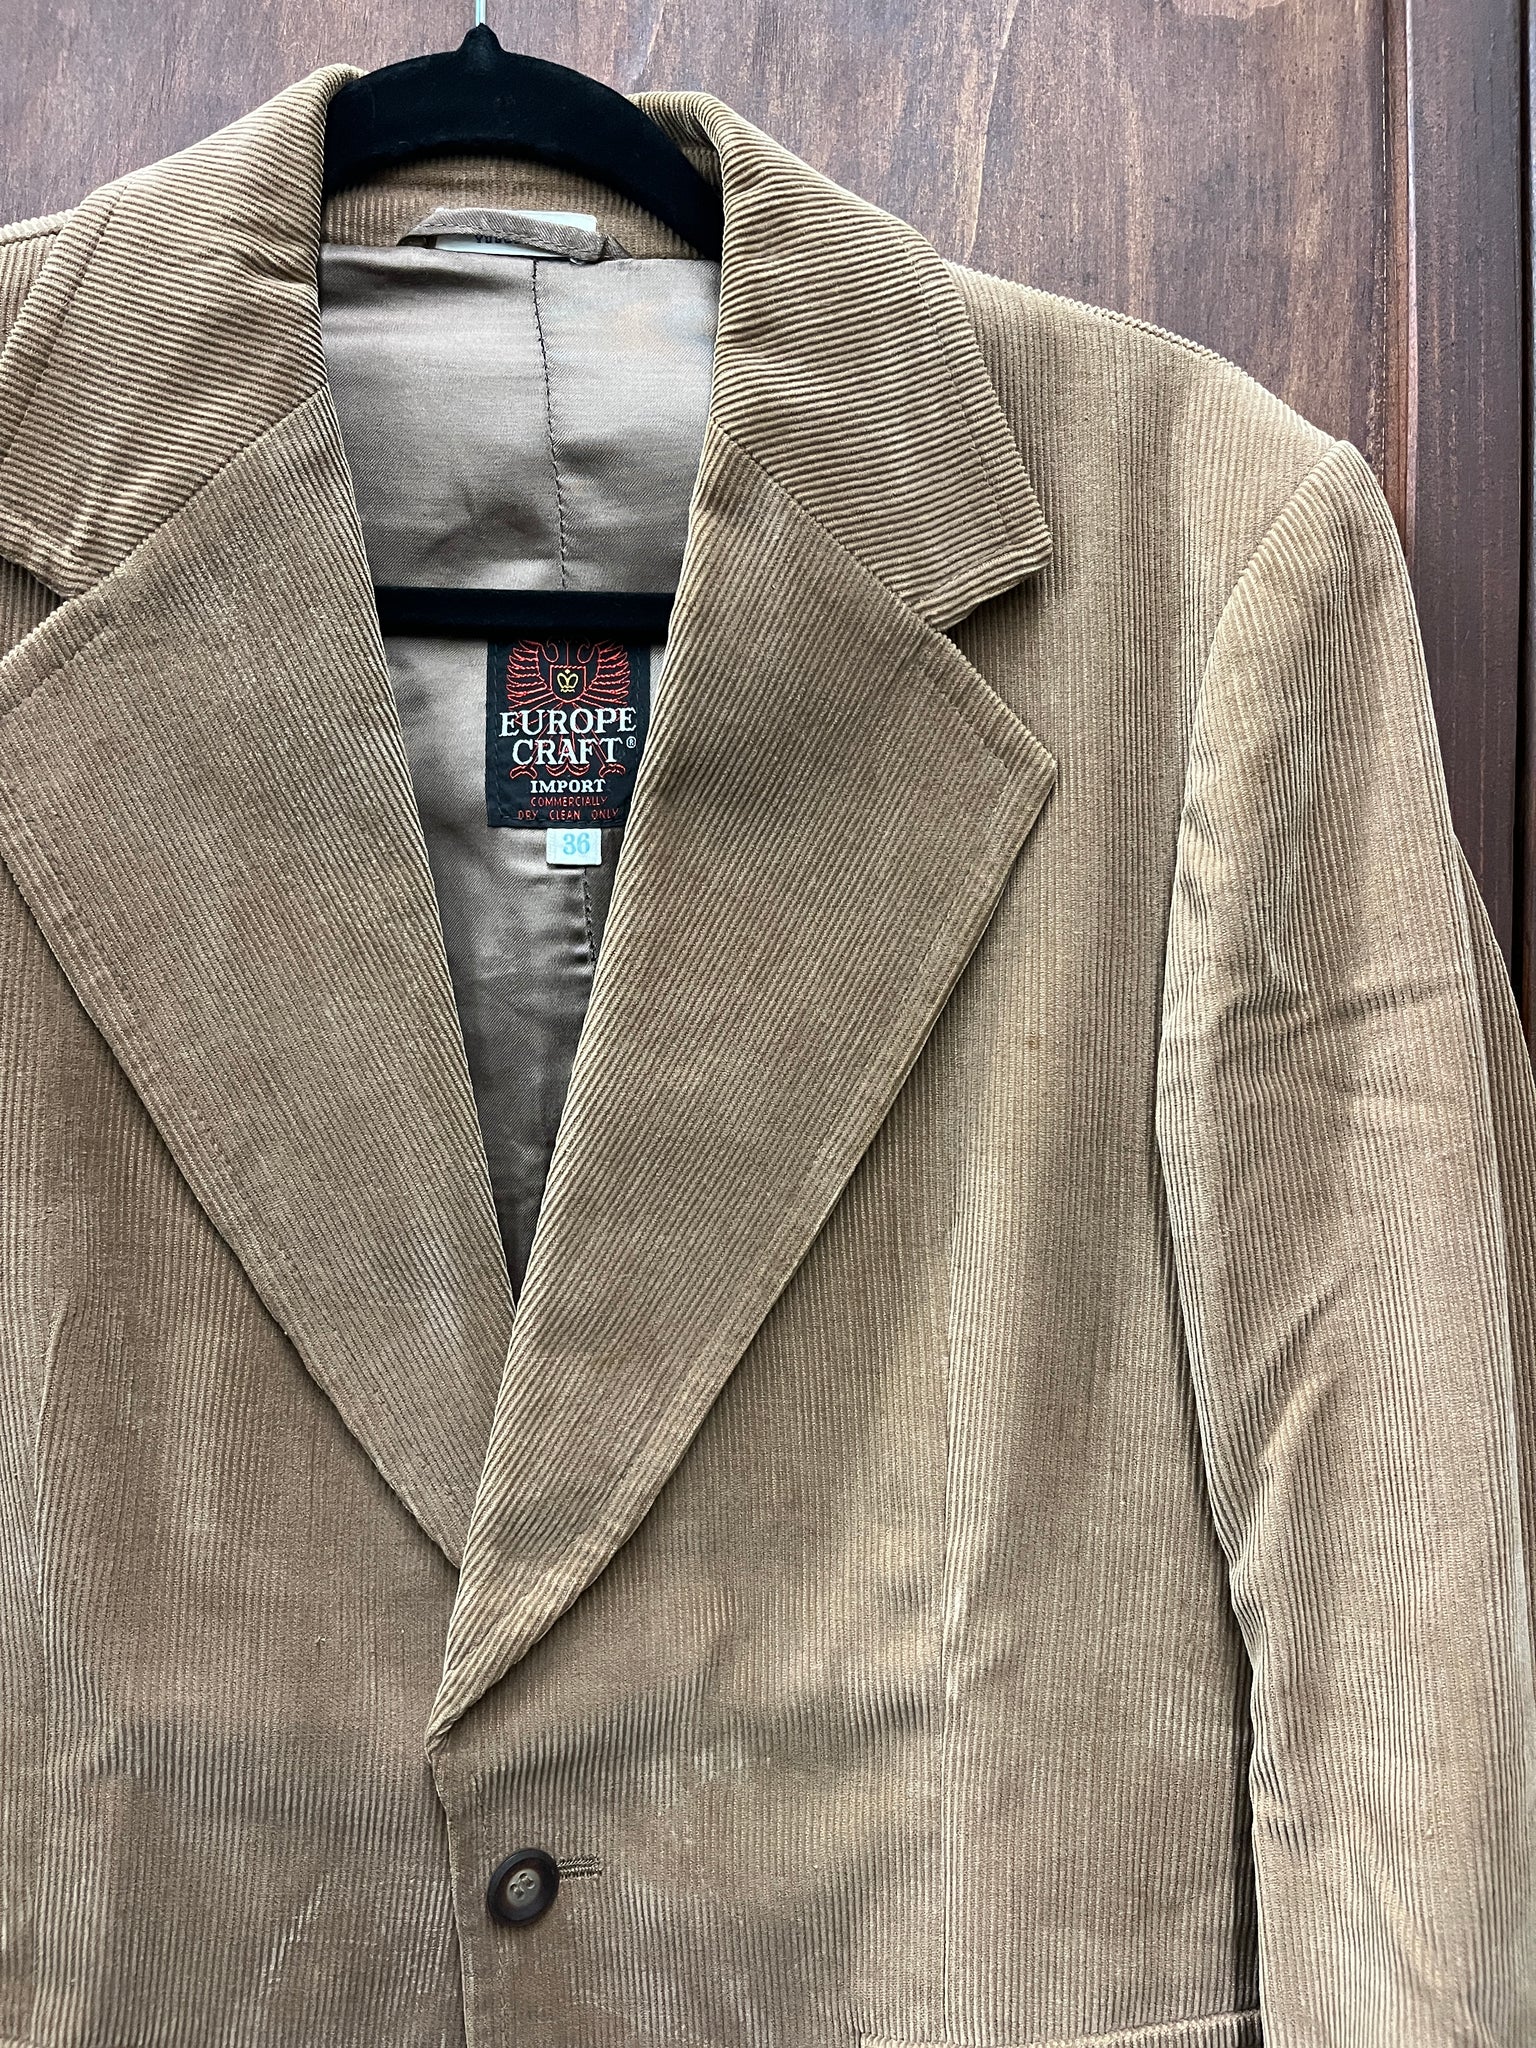 1970s Eurpean Craft brown courdoroy jacket